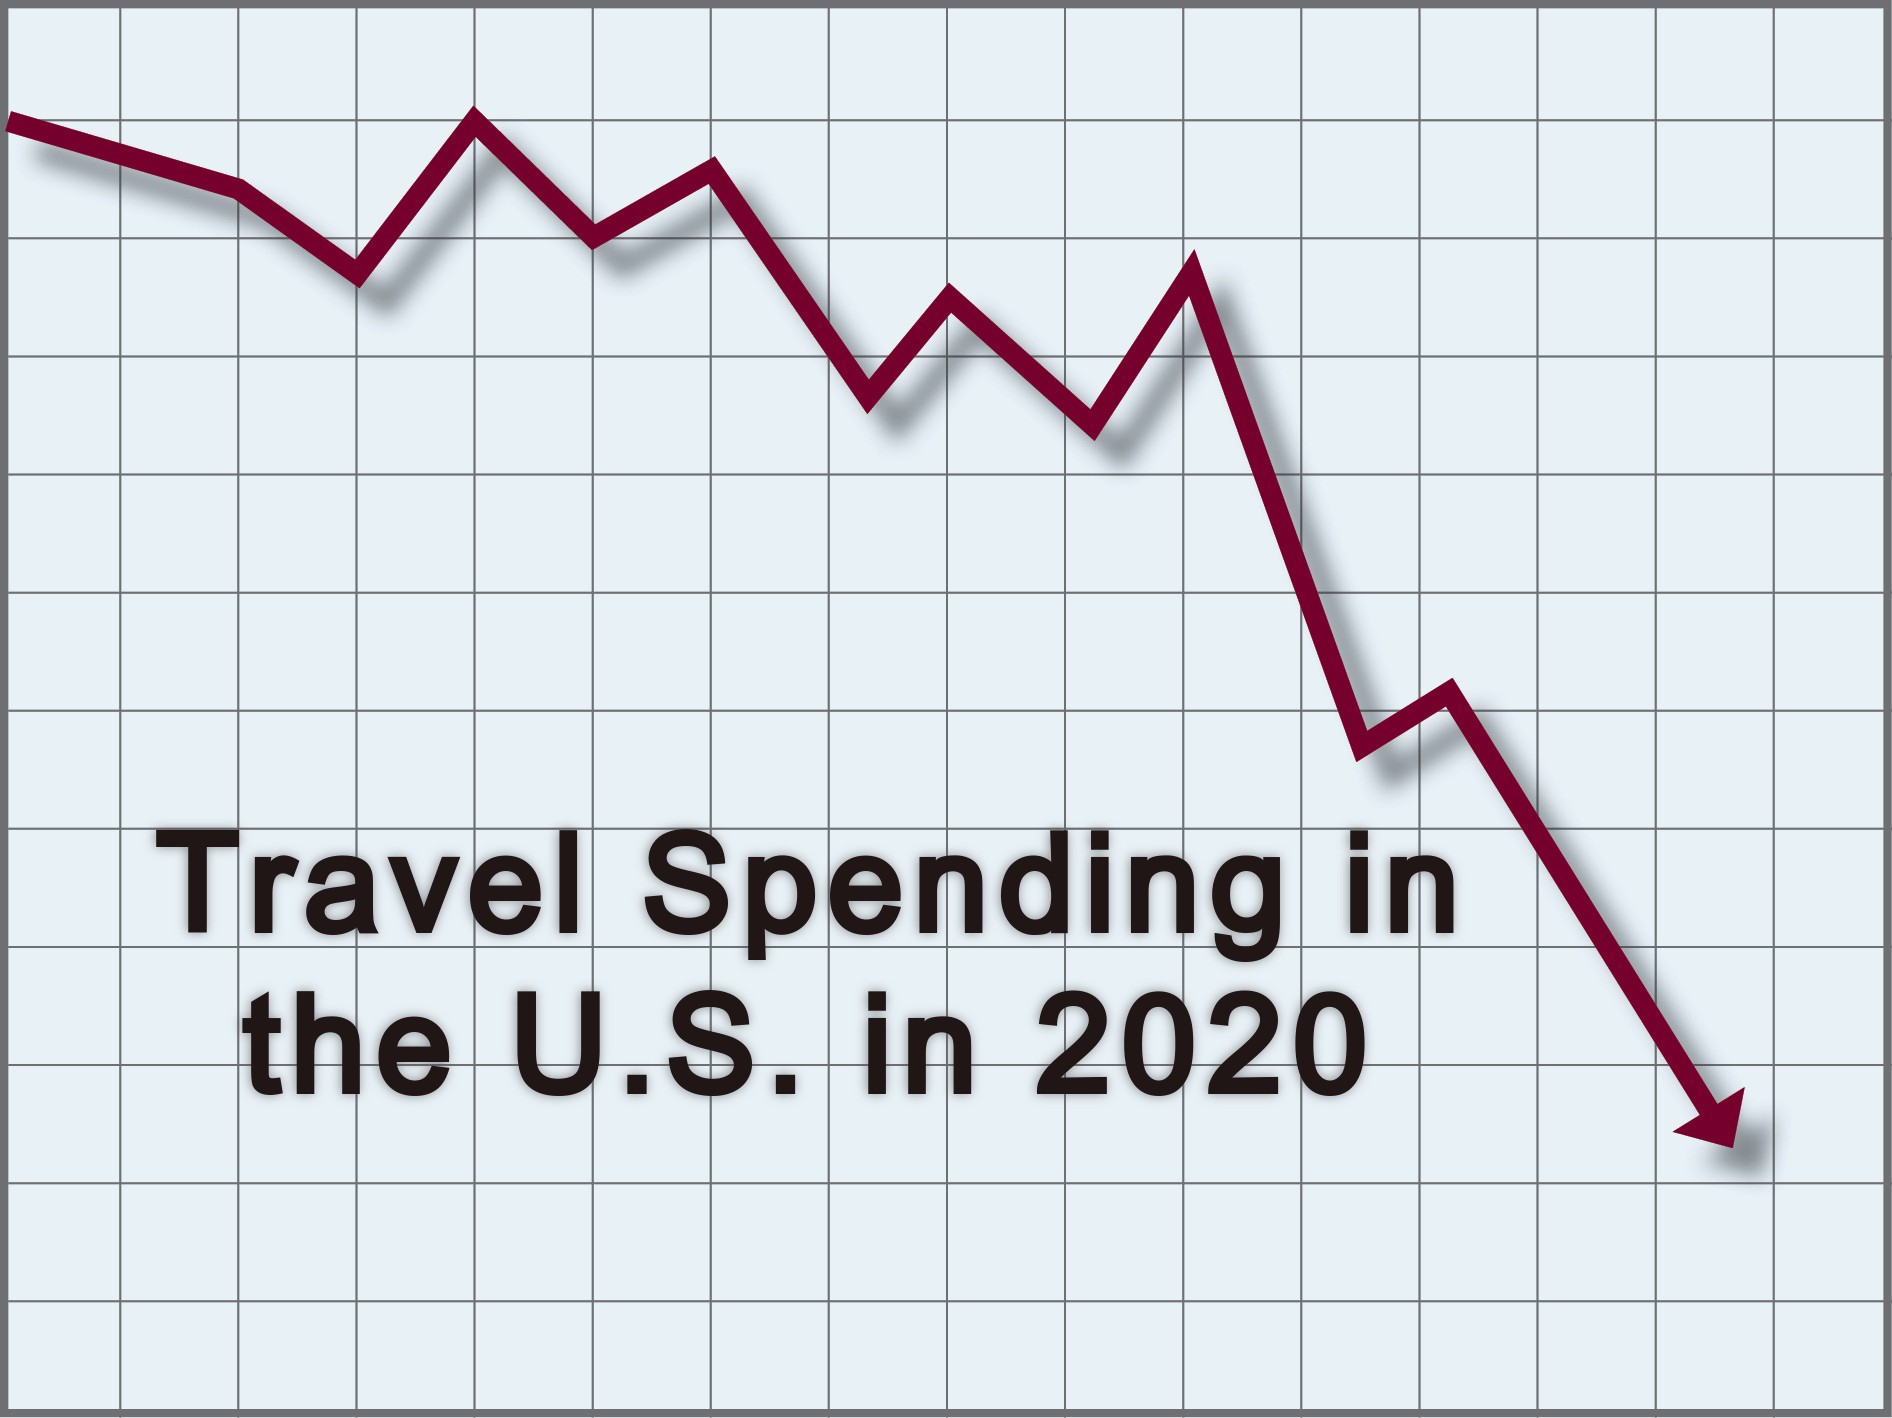 california travel spending